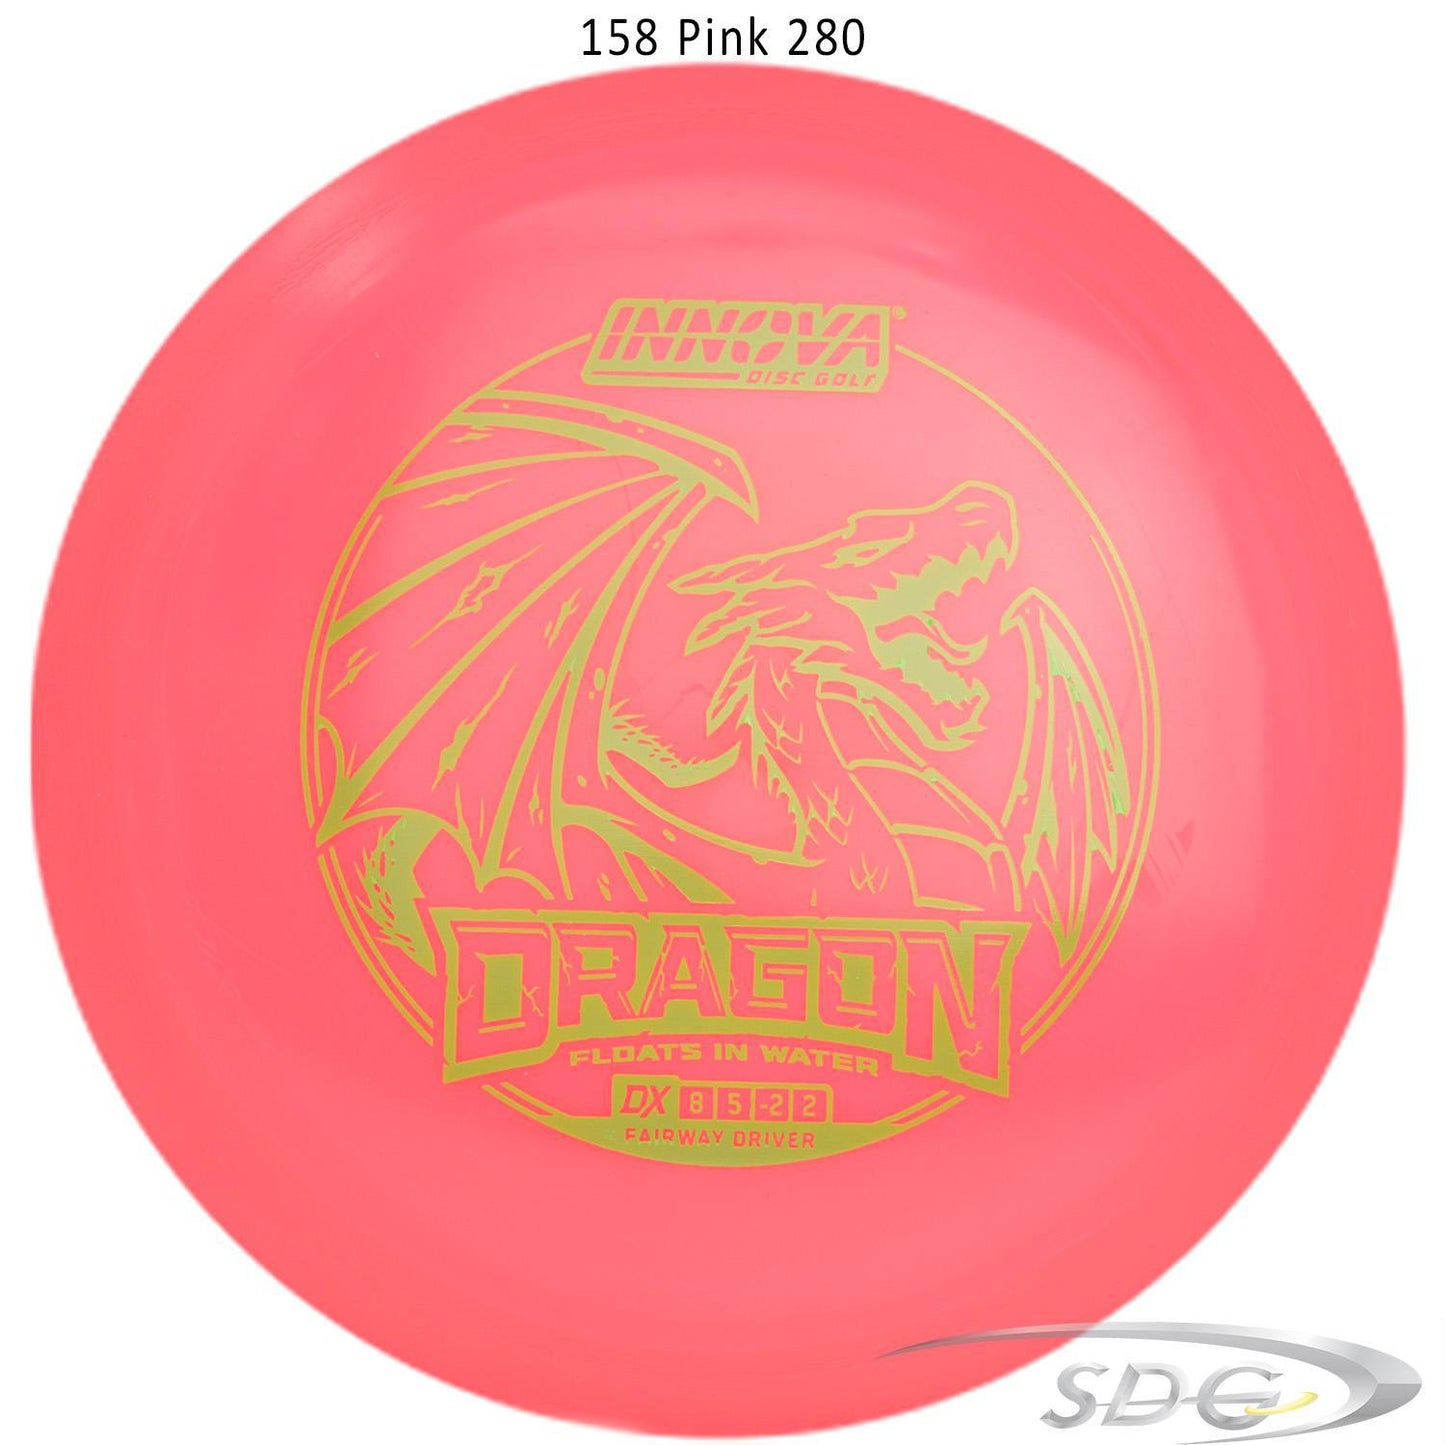 innova-dx-dragon-disc-golf-fairway-driver 158 Pink 280 